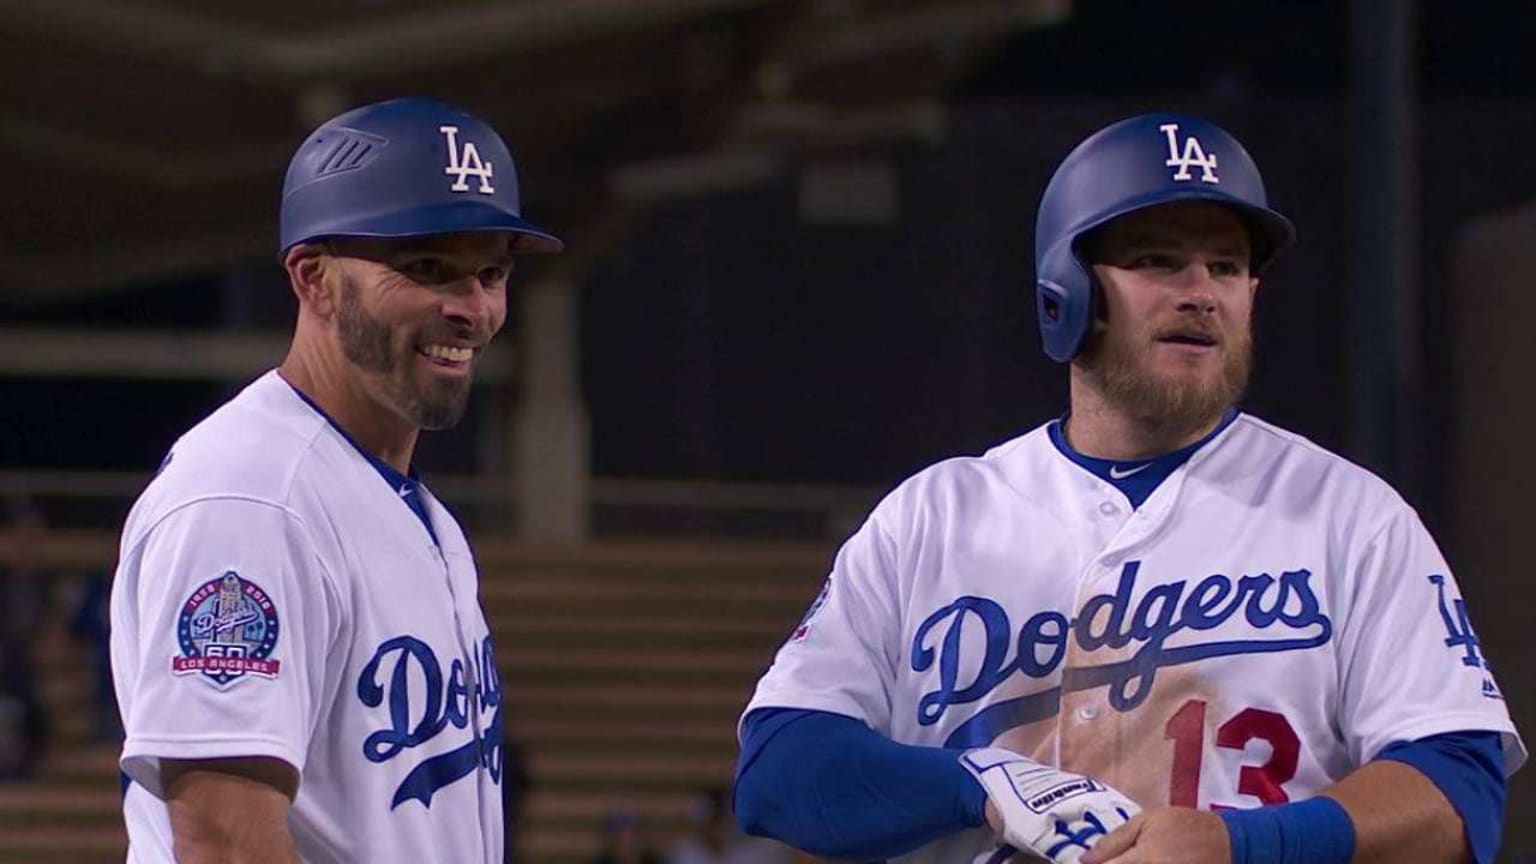 MLB - How an epic at-bat showed the bond between Dodgers teammates